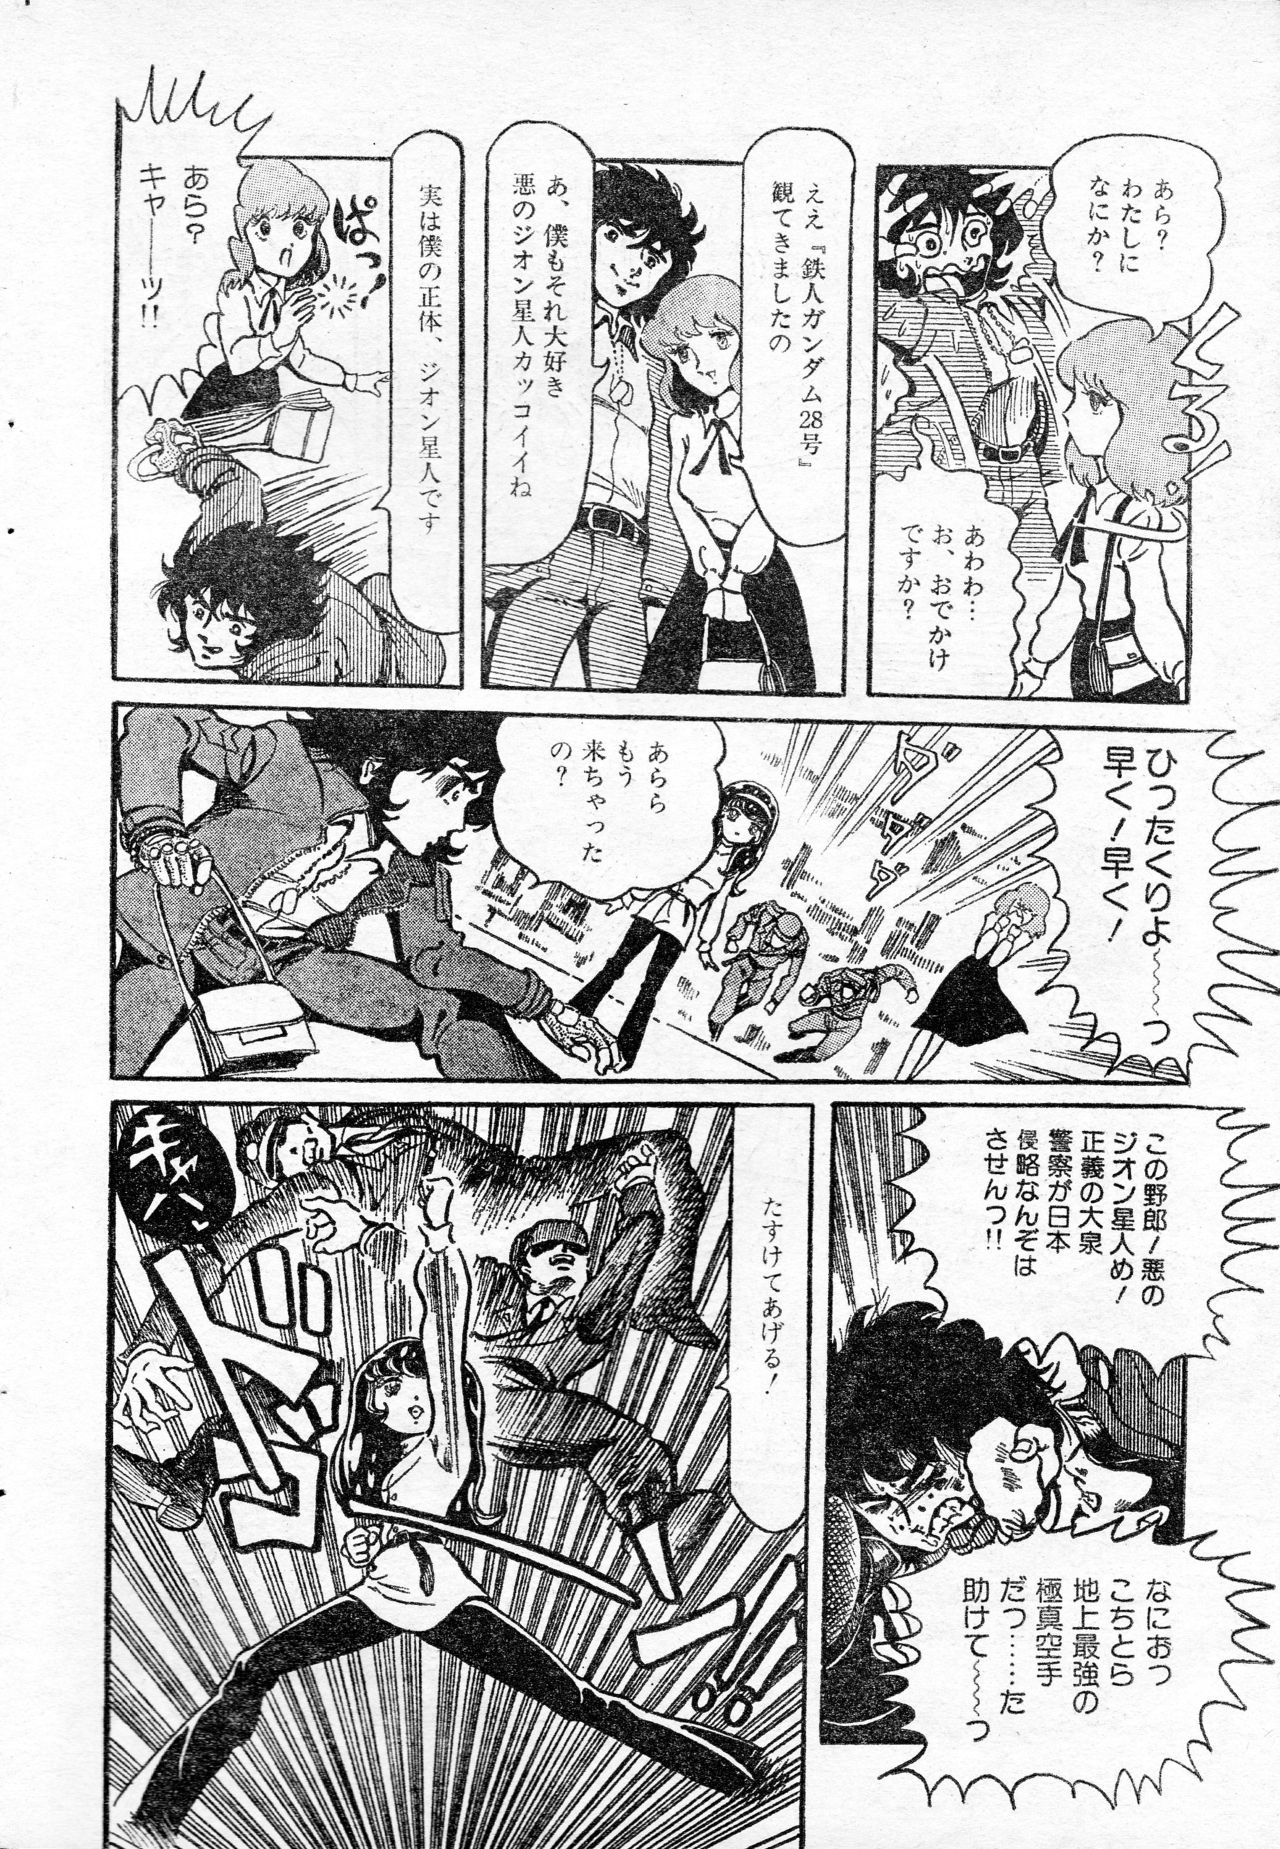 [Hurricane Ryu] Mad City 16 Beat (Lemon People #1, February 1982) [破李拳竜] マッド・シティー16ビート (レモンピープル #1, 1982年2月)